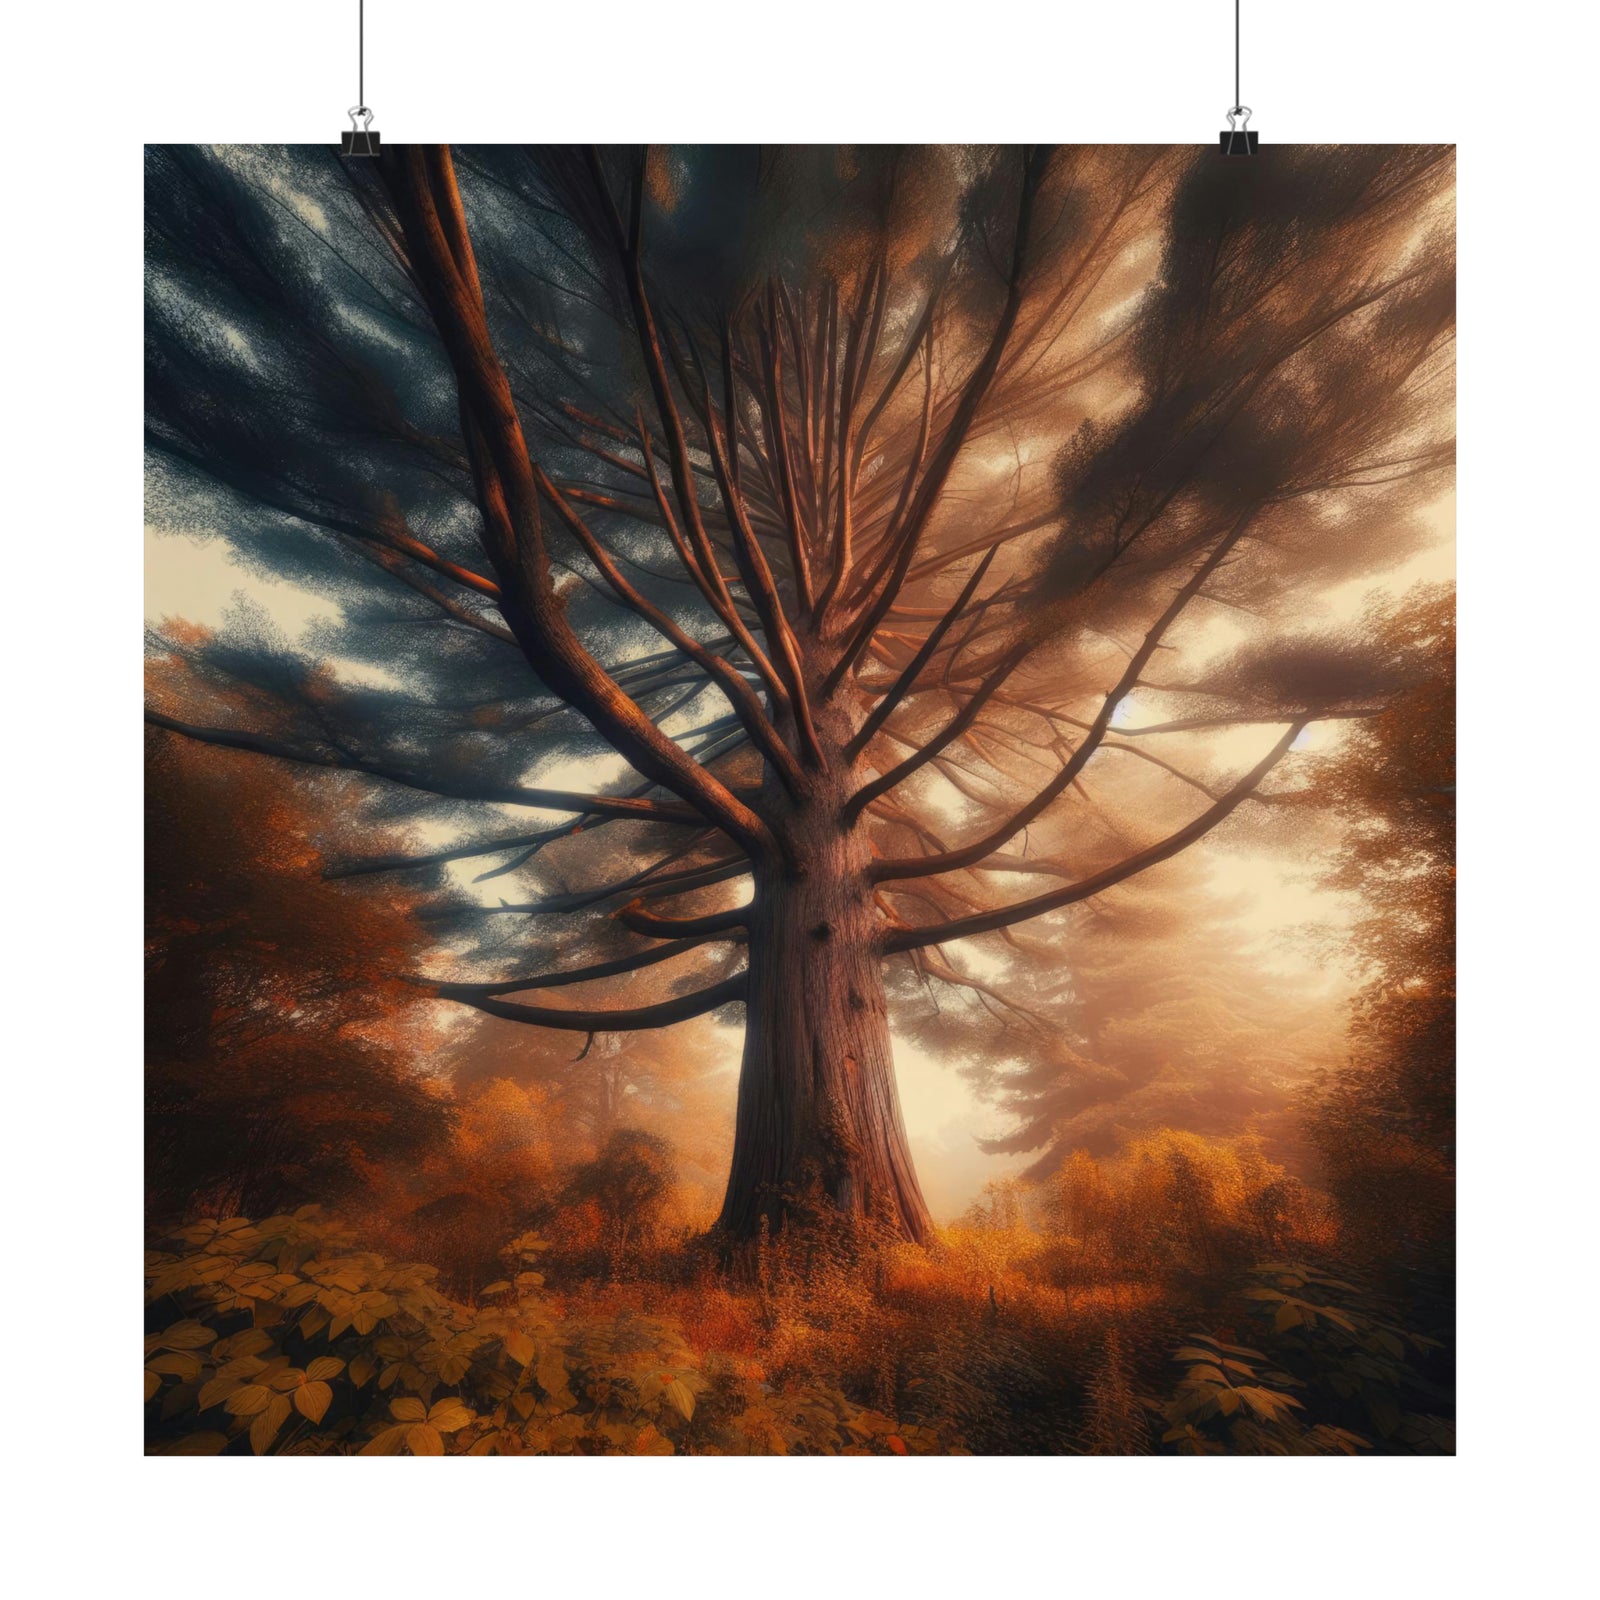 The Missouri Pine's Autumn Splendor Poster